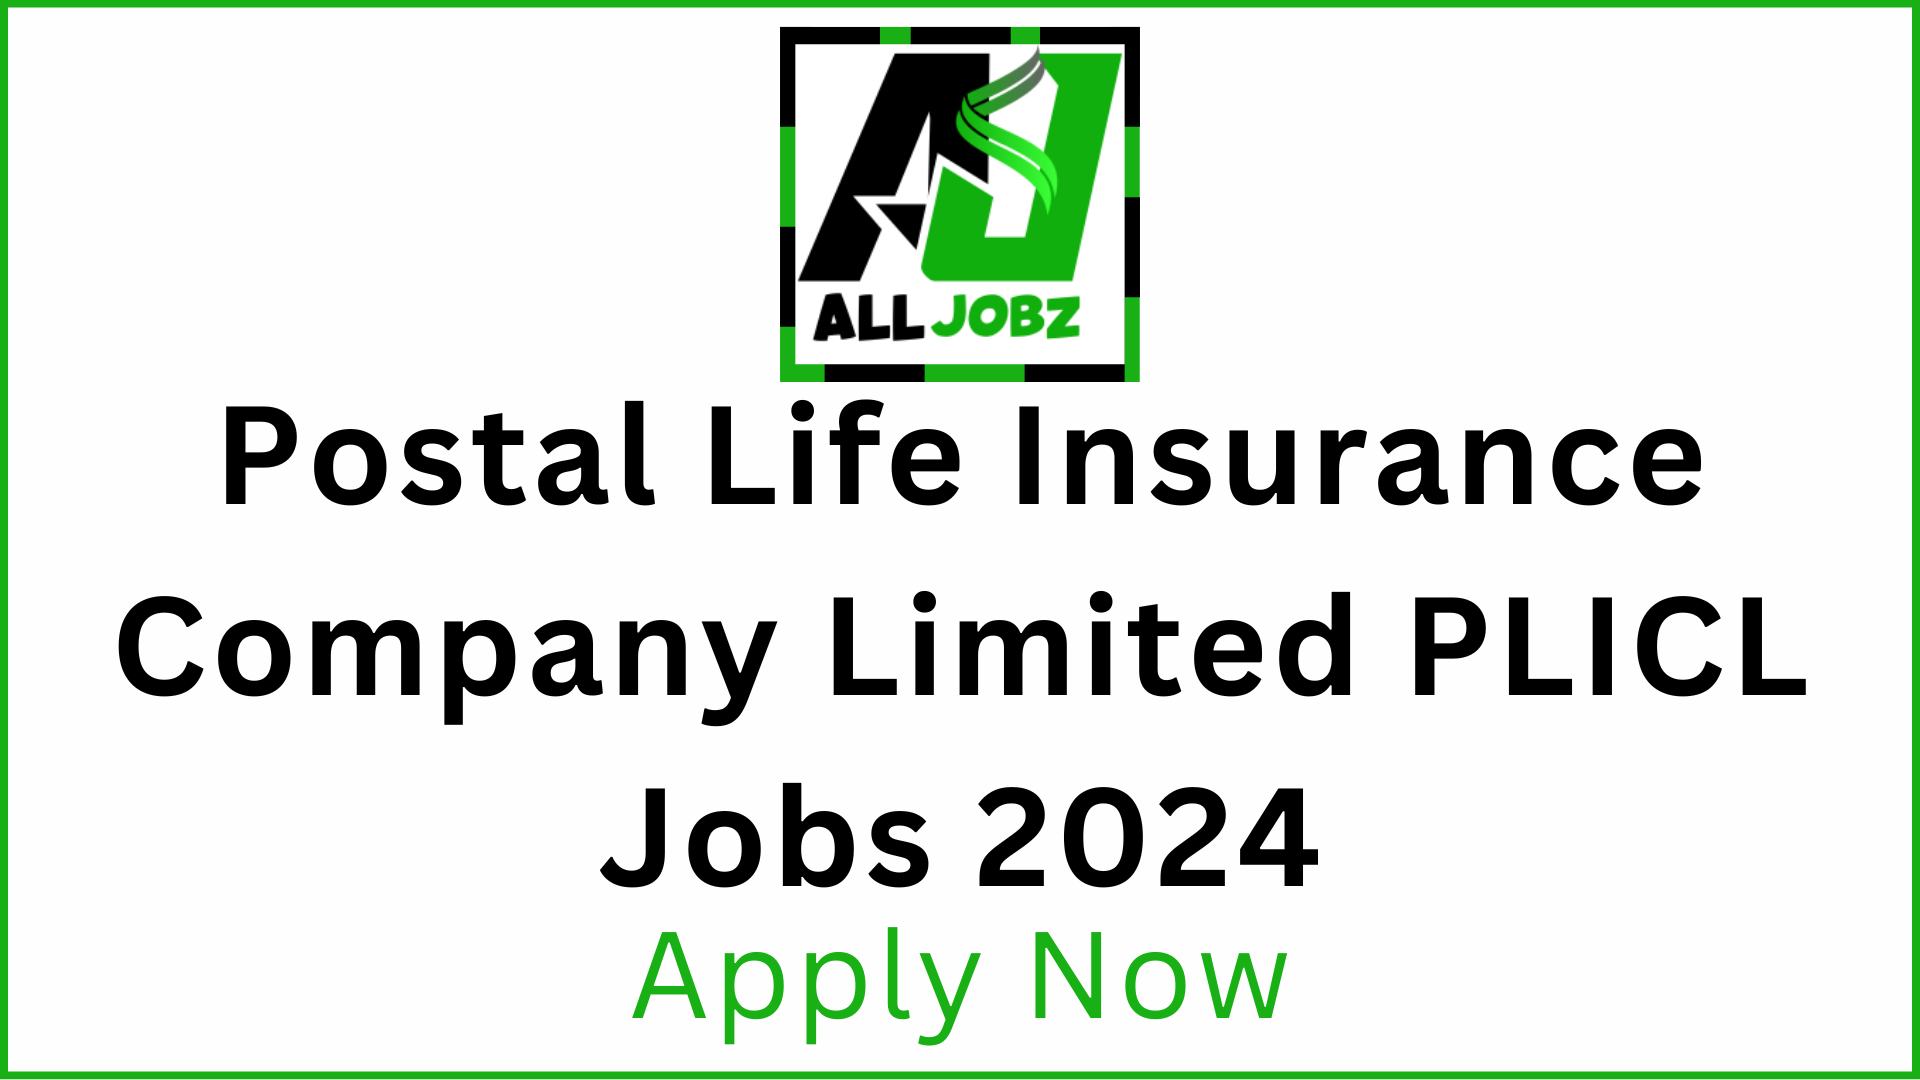 Postal Life Insurance Company Limited Plicl Job Vacancies